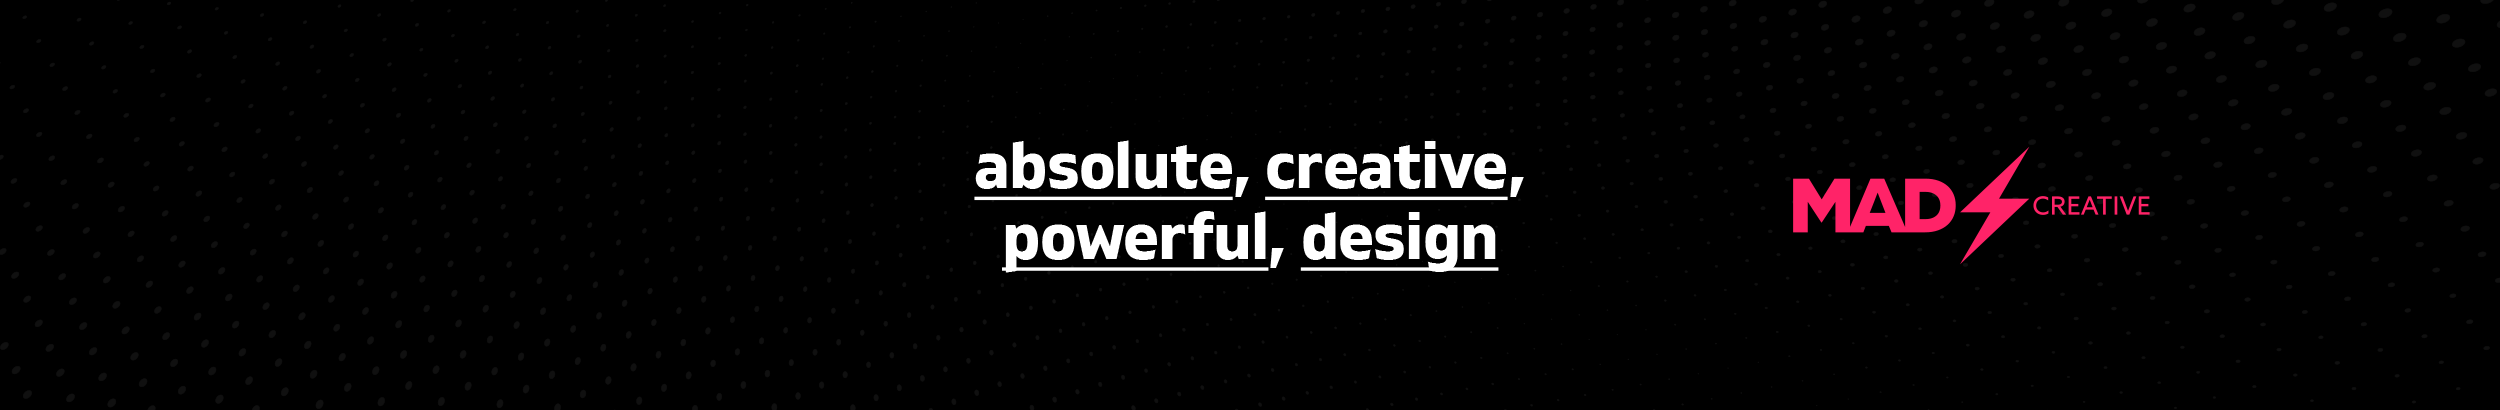 MAD Creative's profile banner